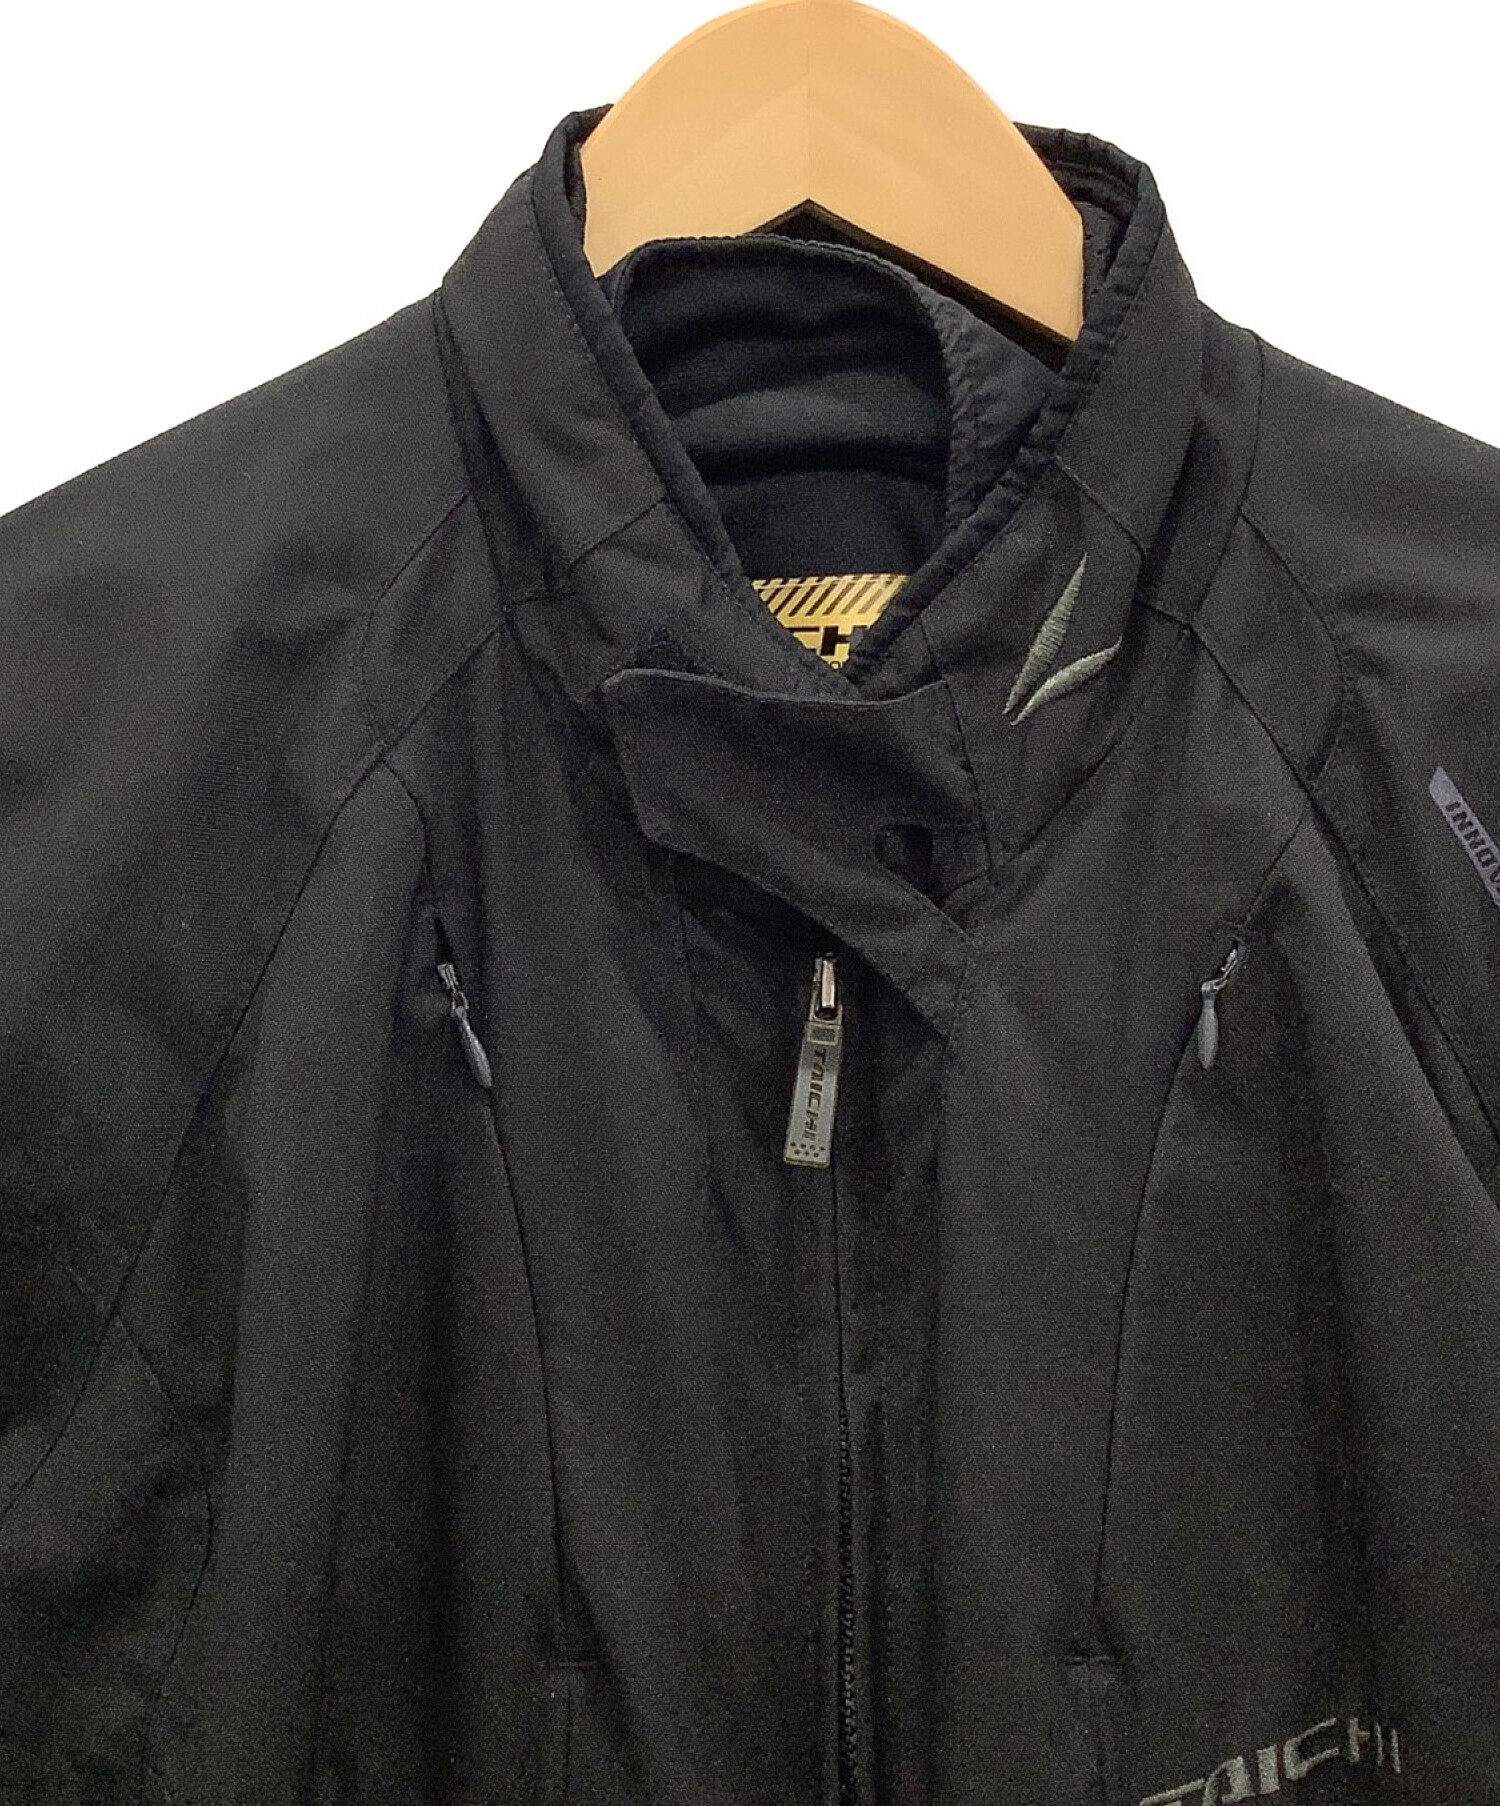 RS TAICHI (タイチ) シグネイチャーオールシーズンジャケット ブラック サイズ:L